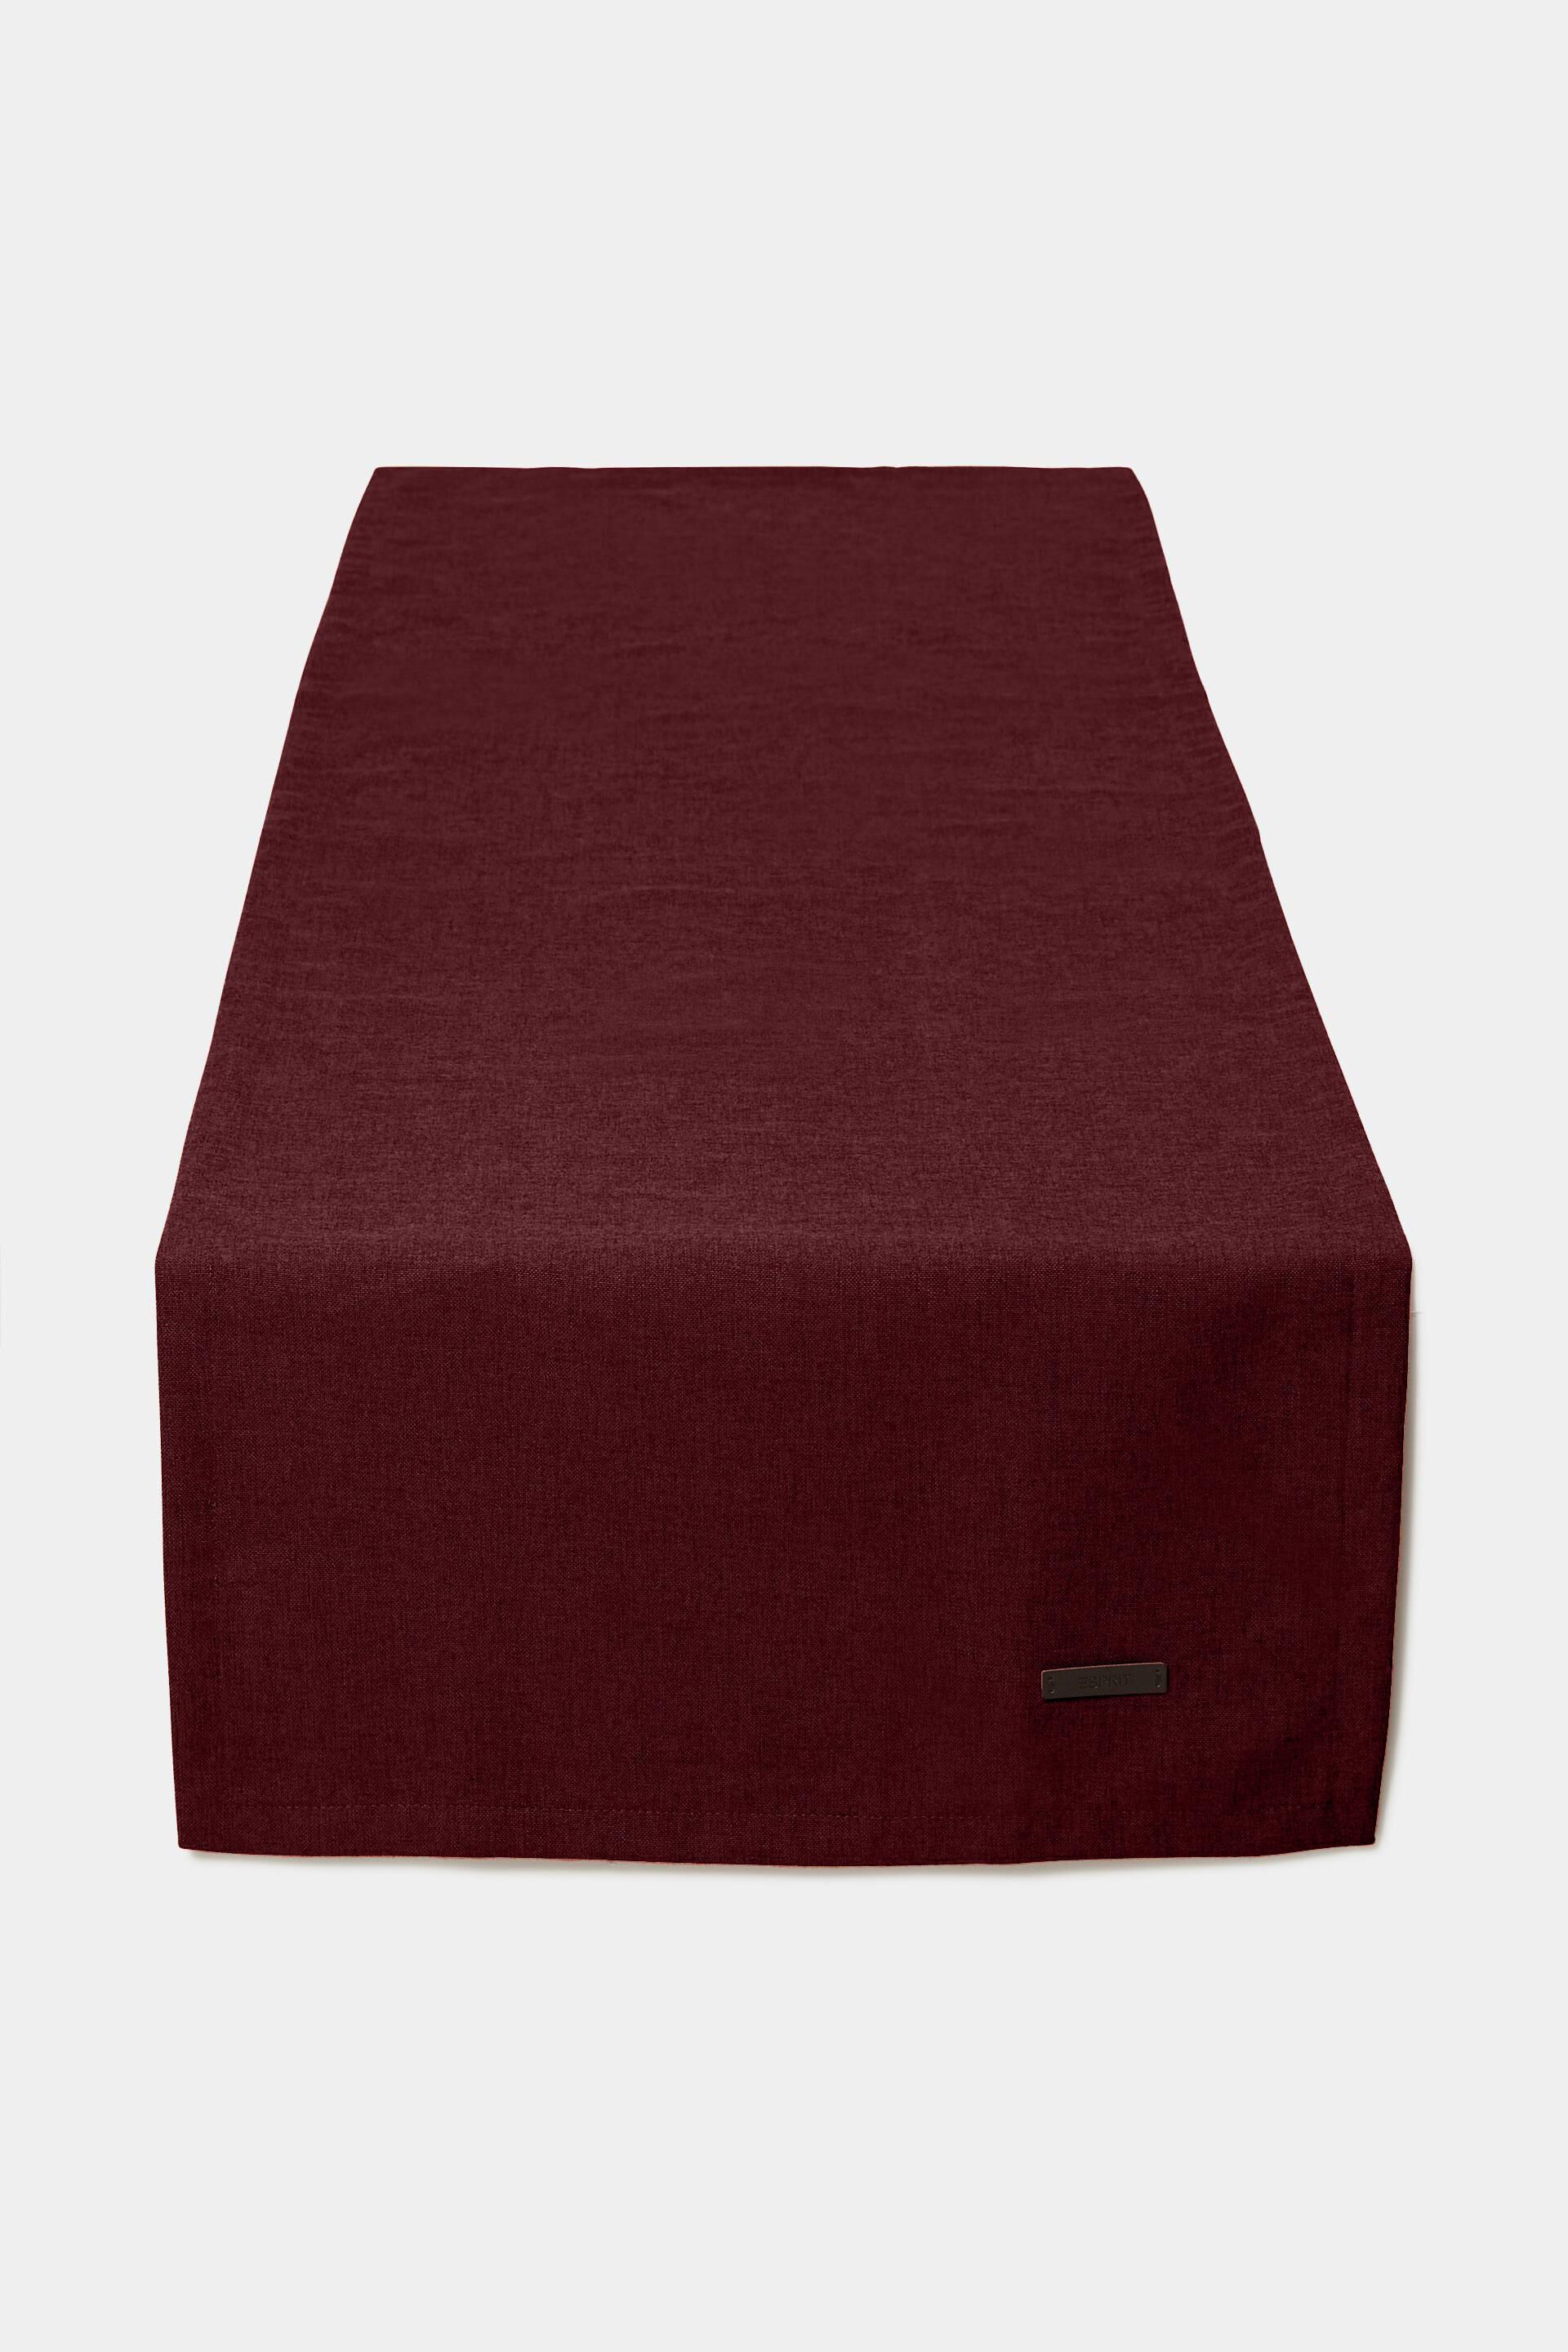 Esprit fabric runner Table melange in woven